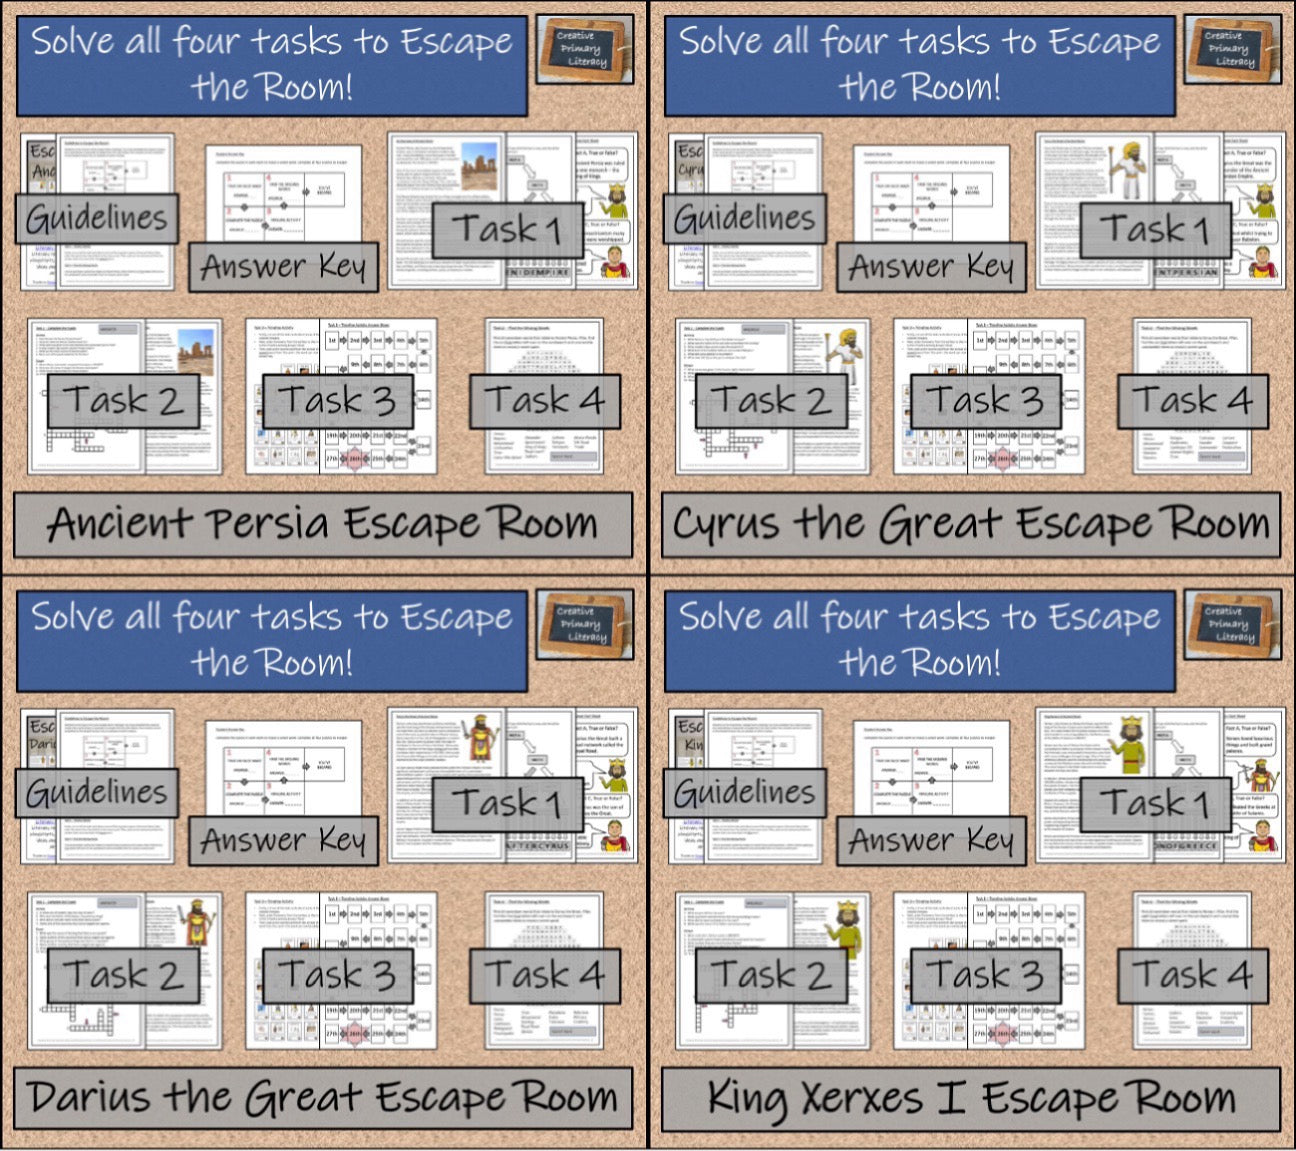 Ancient History Escape Room Mega Bundles | Volume 1 & Volume 2 | 5th & 6th Grade